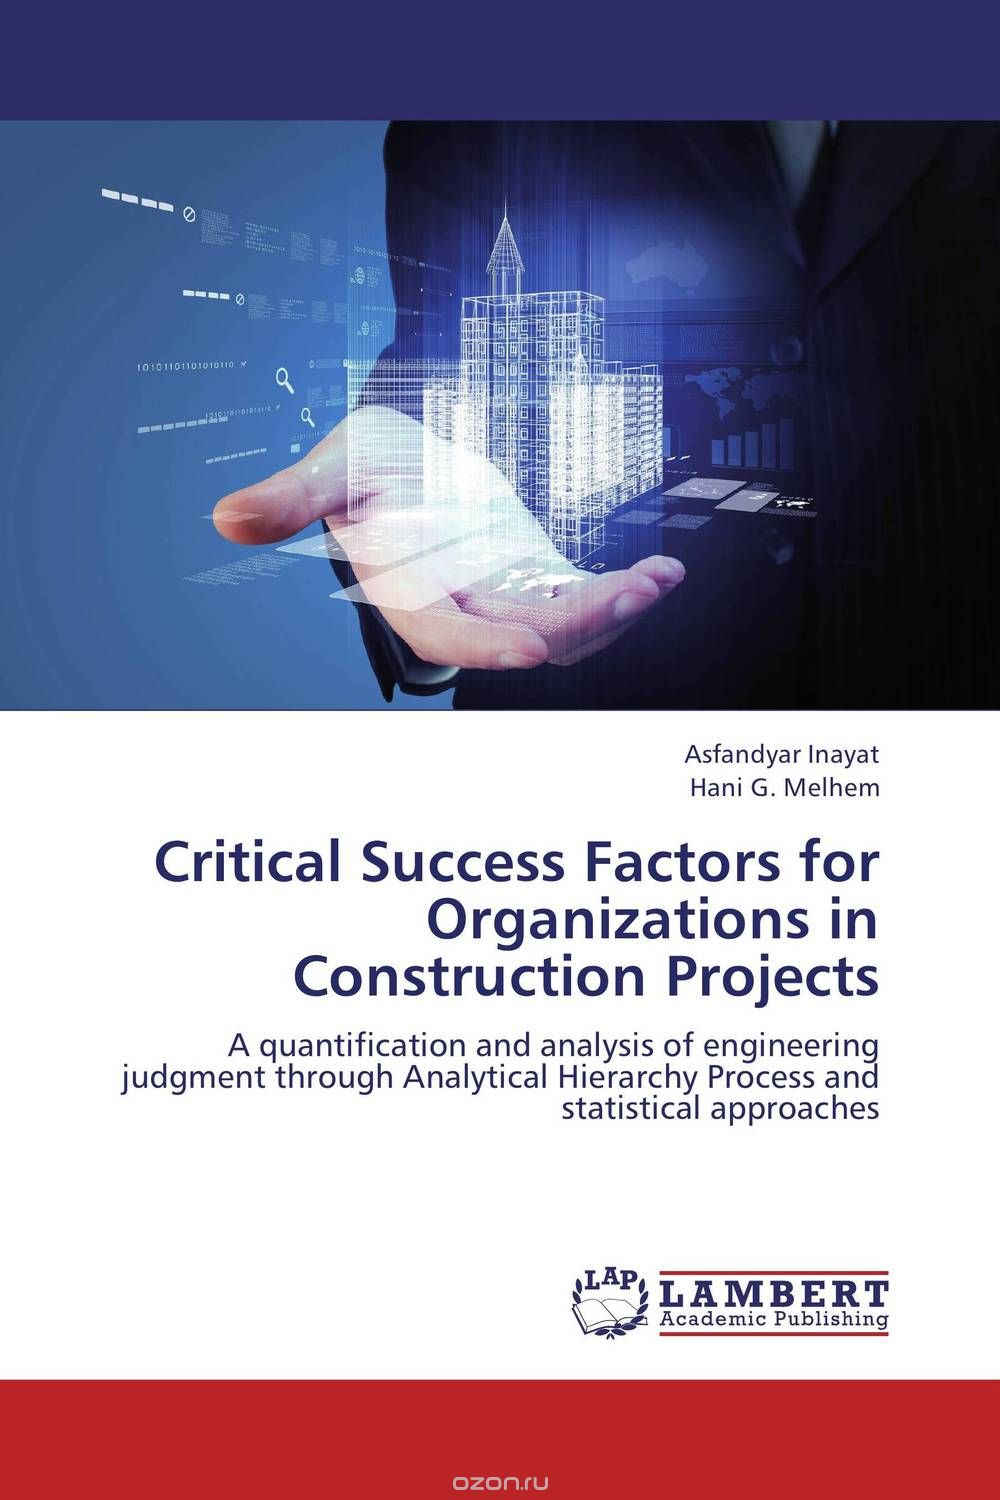 Скачать книгу "Critical Success Factors for Organizations in Construction Projects"